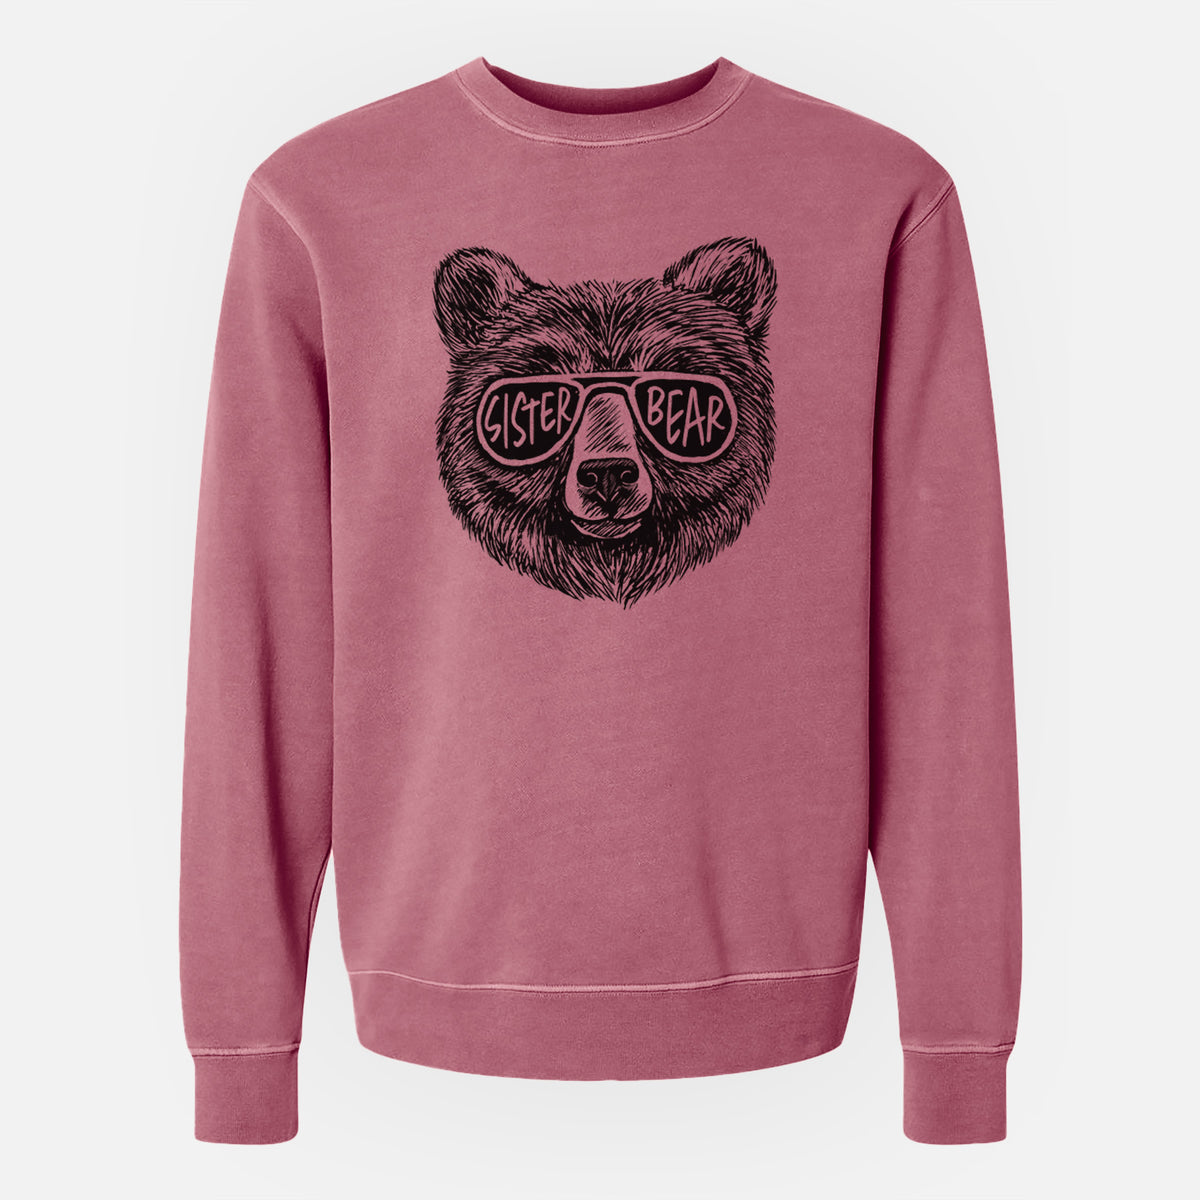 Sister Bear - Unisex Pigment Dyed Crew Sweatshirt